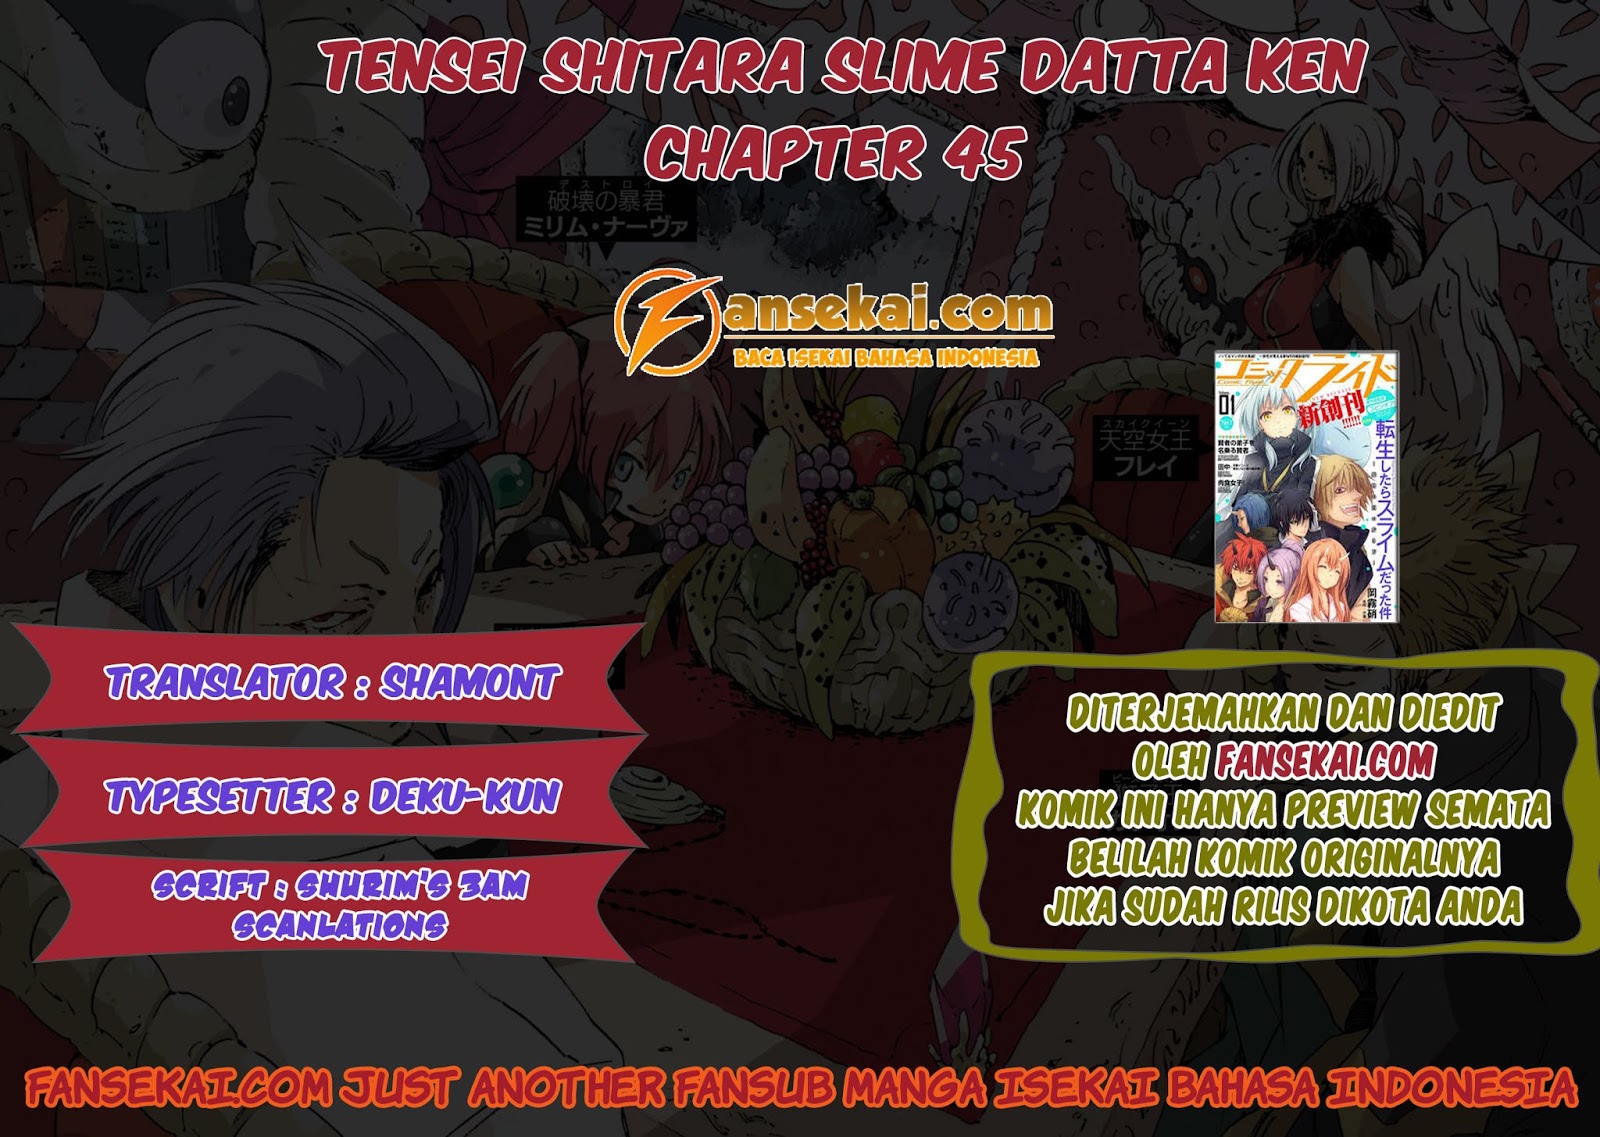 Tensei Shitara Slime Datta Ken Chapter 45